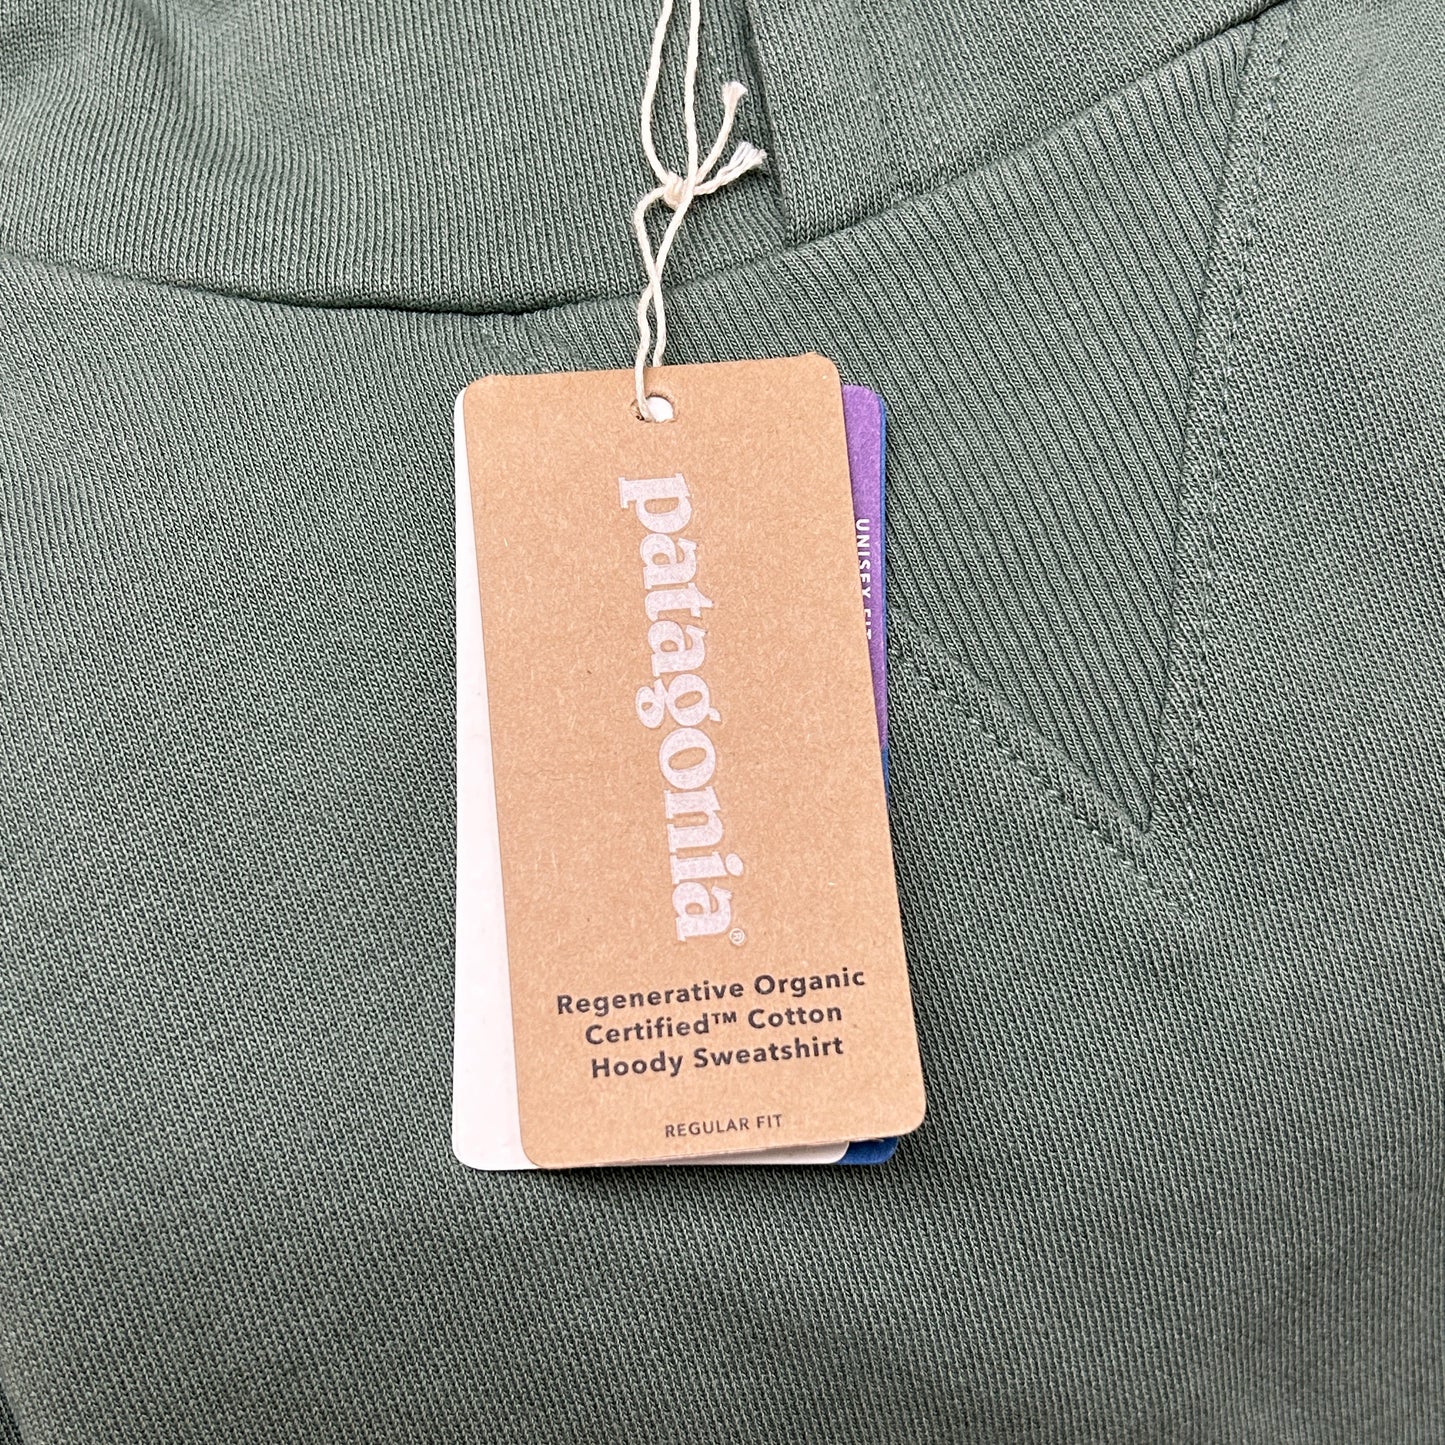 PATAGONIA Regenerative Organic Cotton Hoody Sweatshirt Sz S Hemlock Green (New)